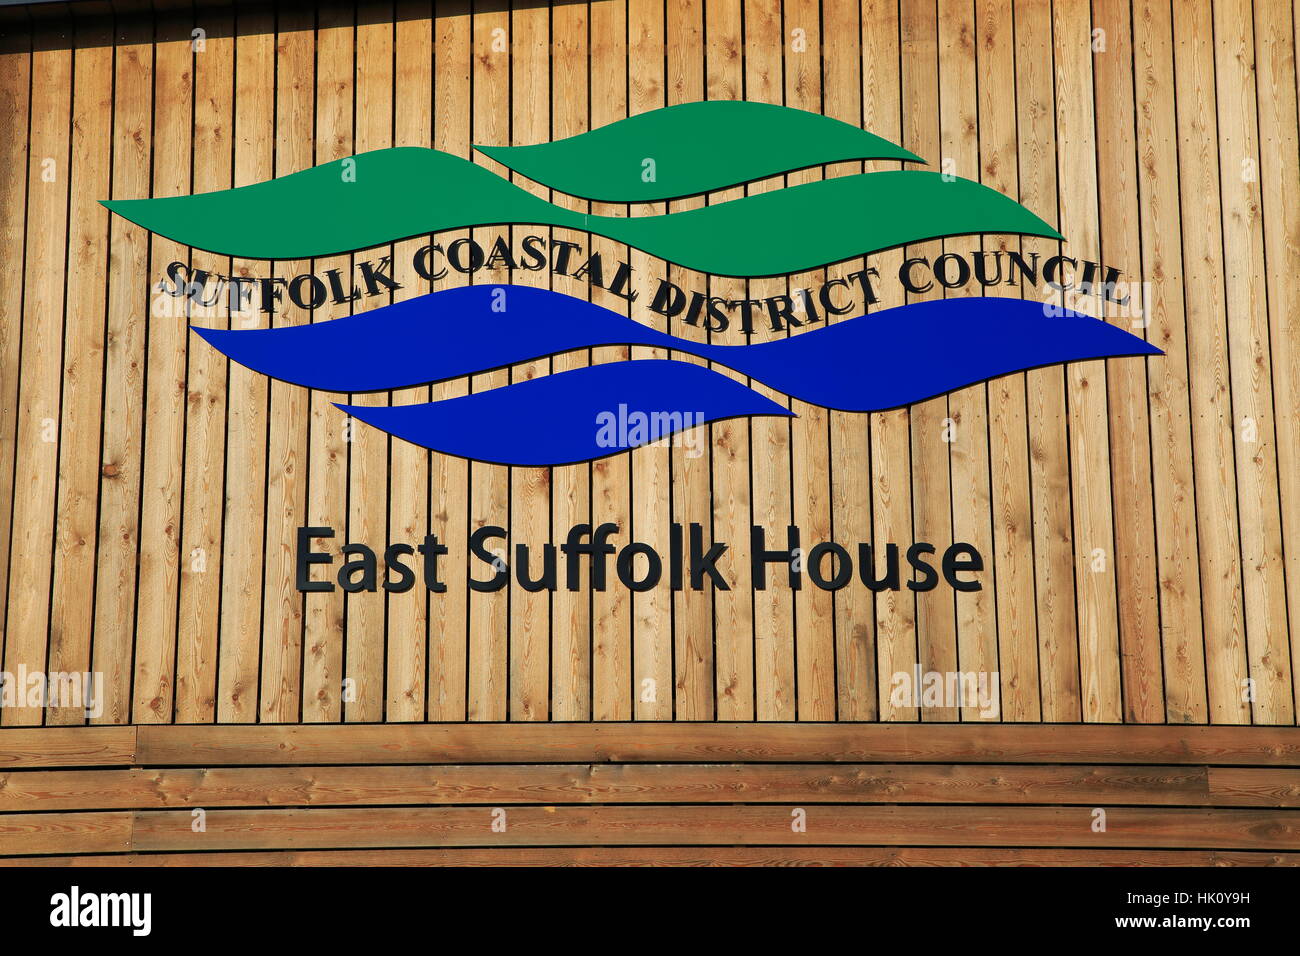 East Suffolk House, Riduna Park, Melton, Suffolk, England, UK neue Hochhaus für Suffolk Coastal District Council Stockfoto